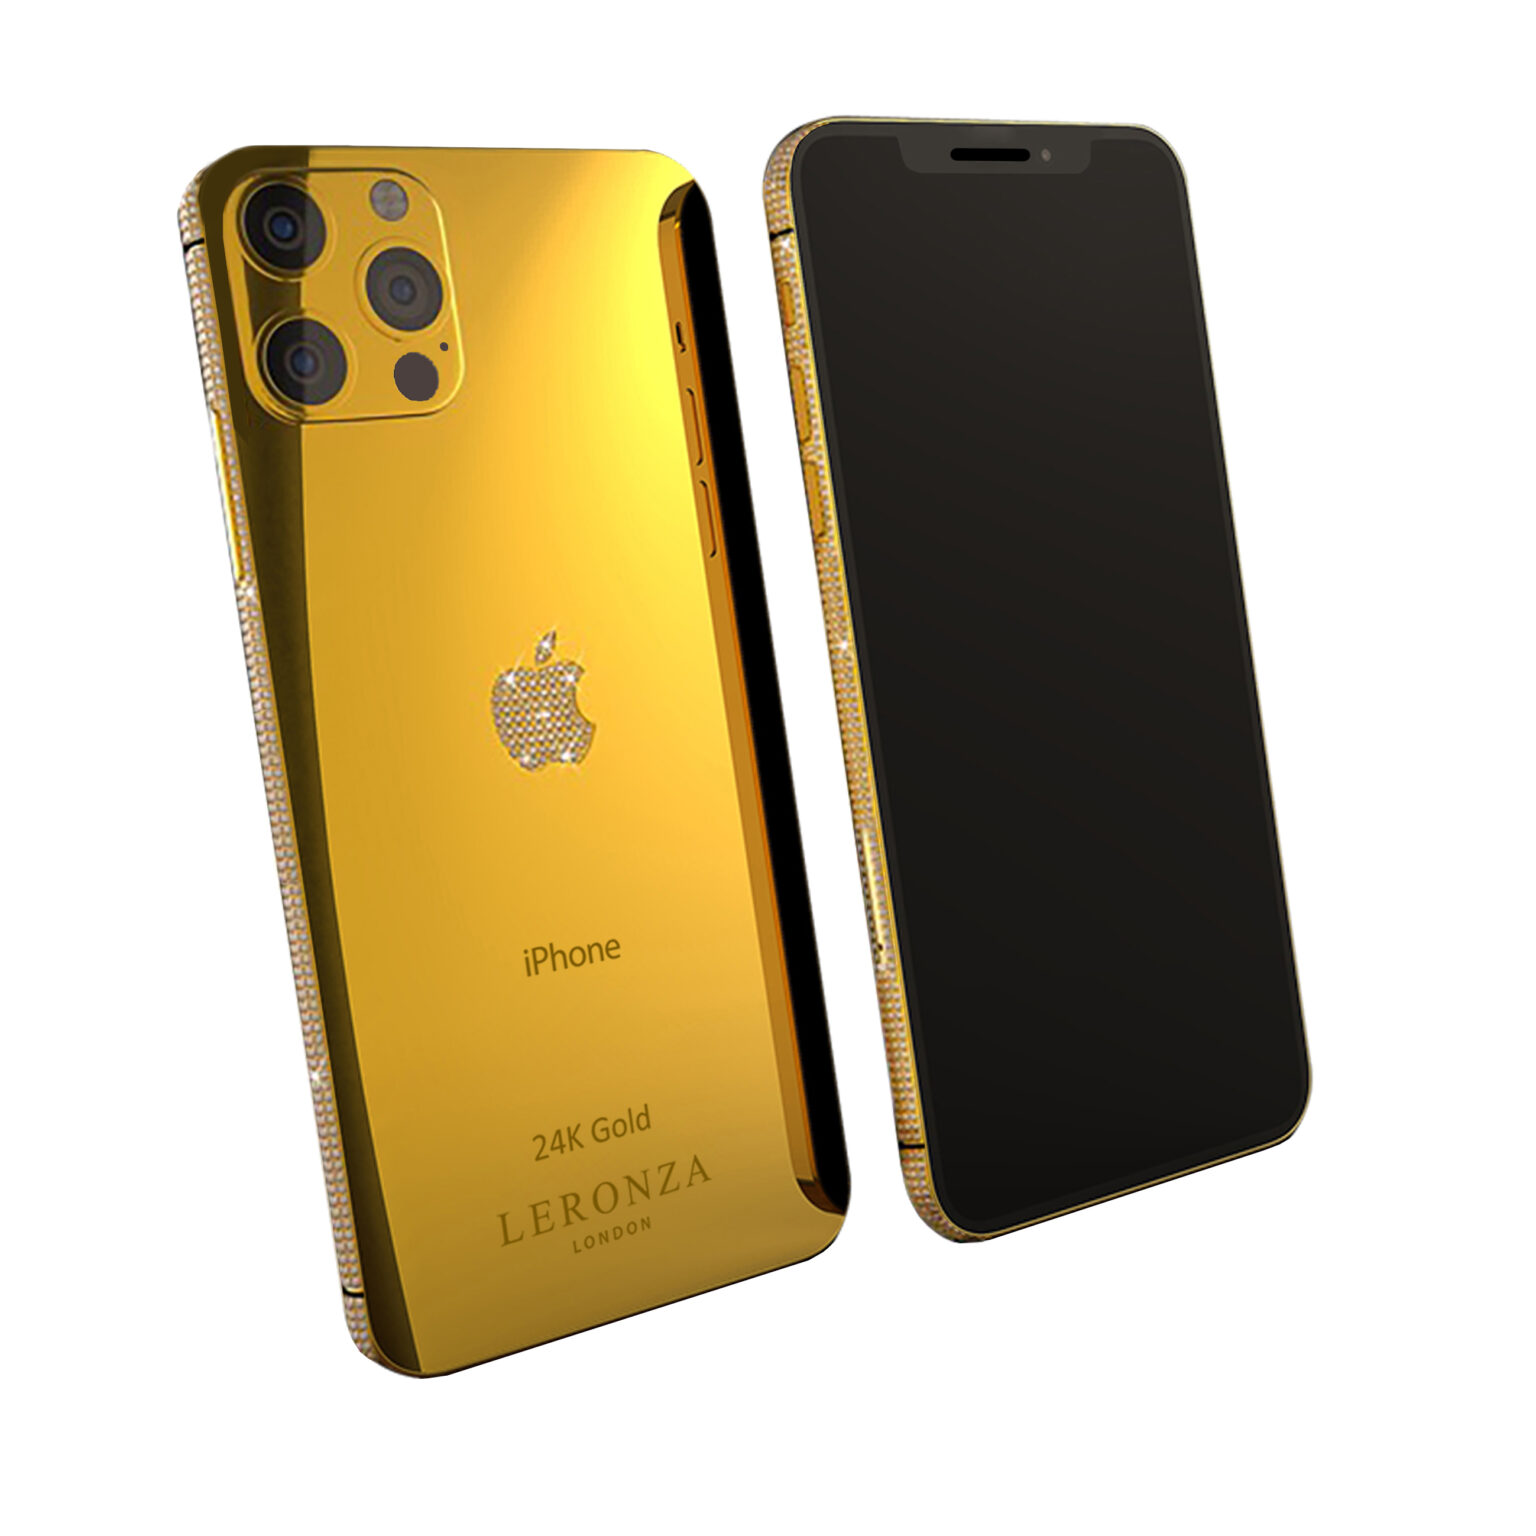 Leronza-24k-Gold-iPhone-12-Pro-Diamonds-copy-1536×1536-1